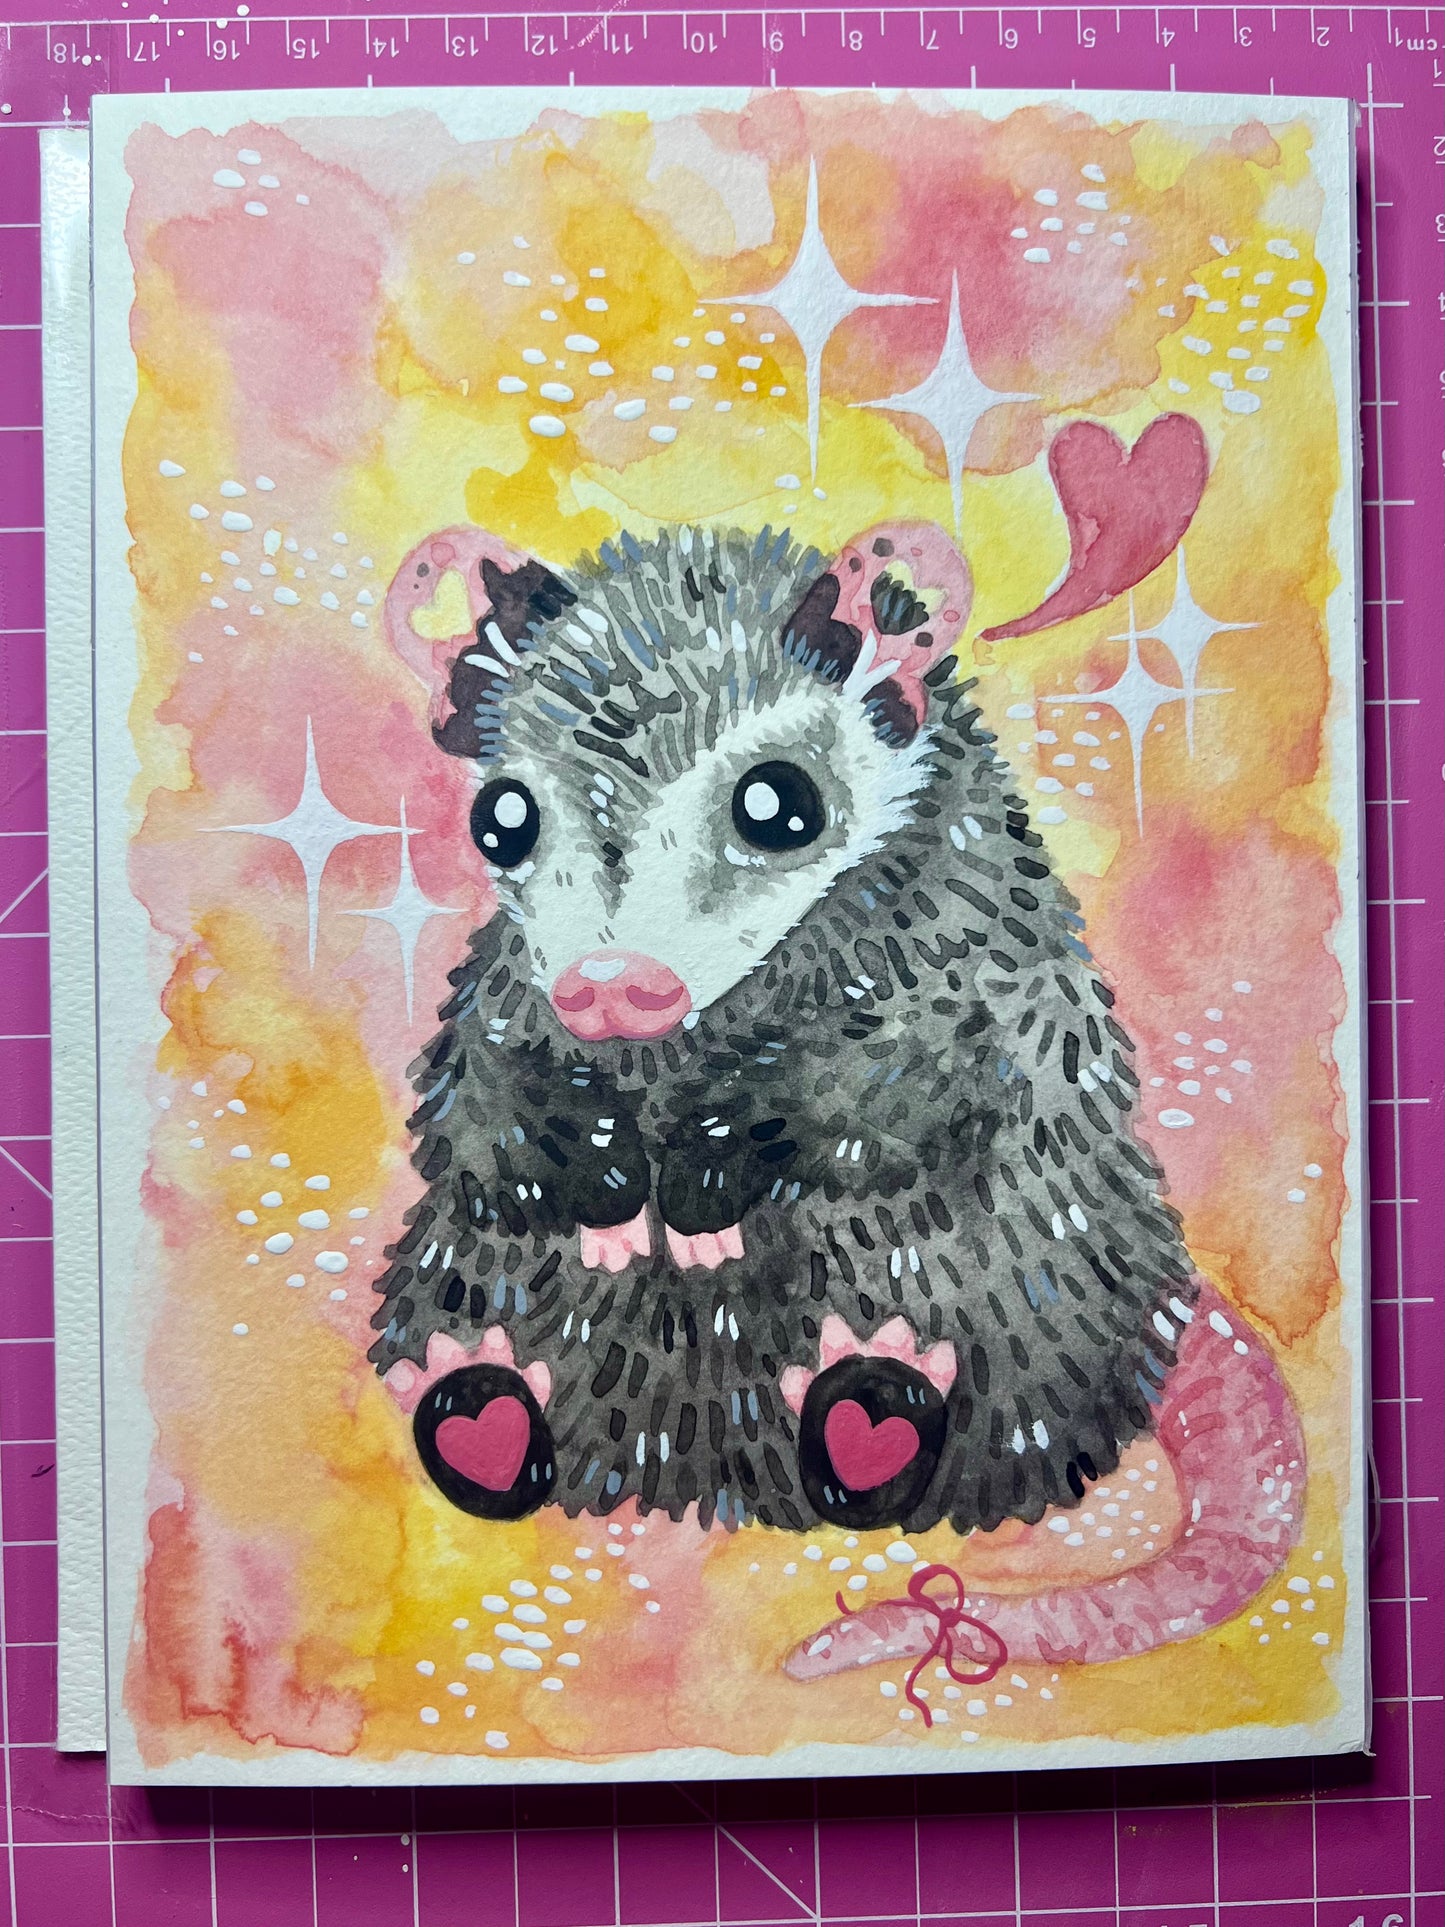 Cutie Possum Painting